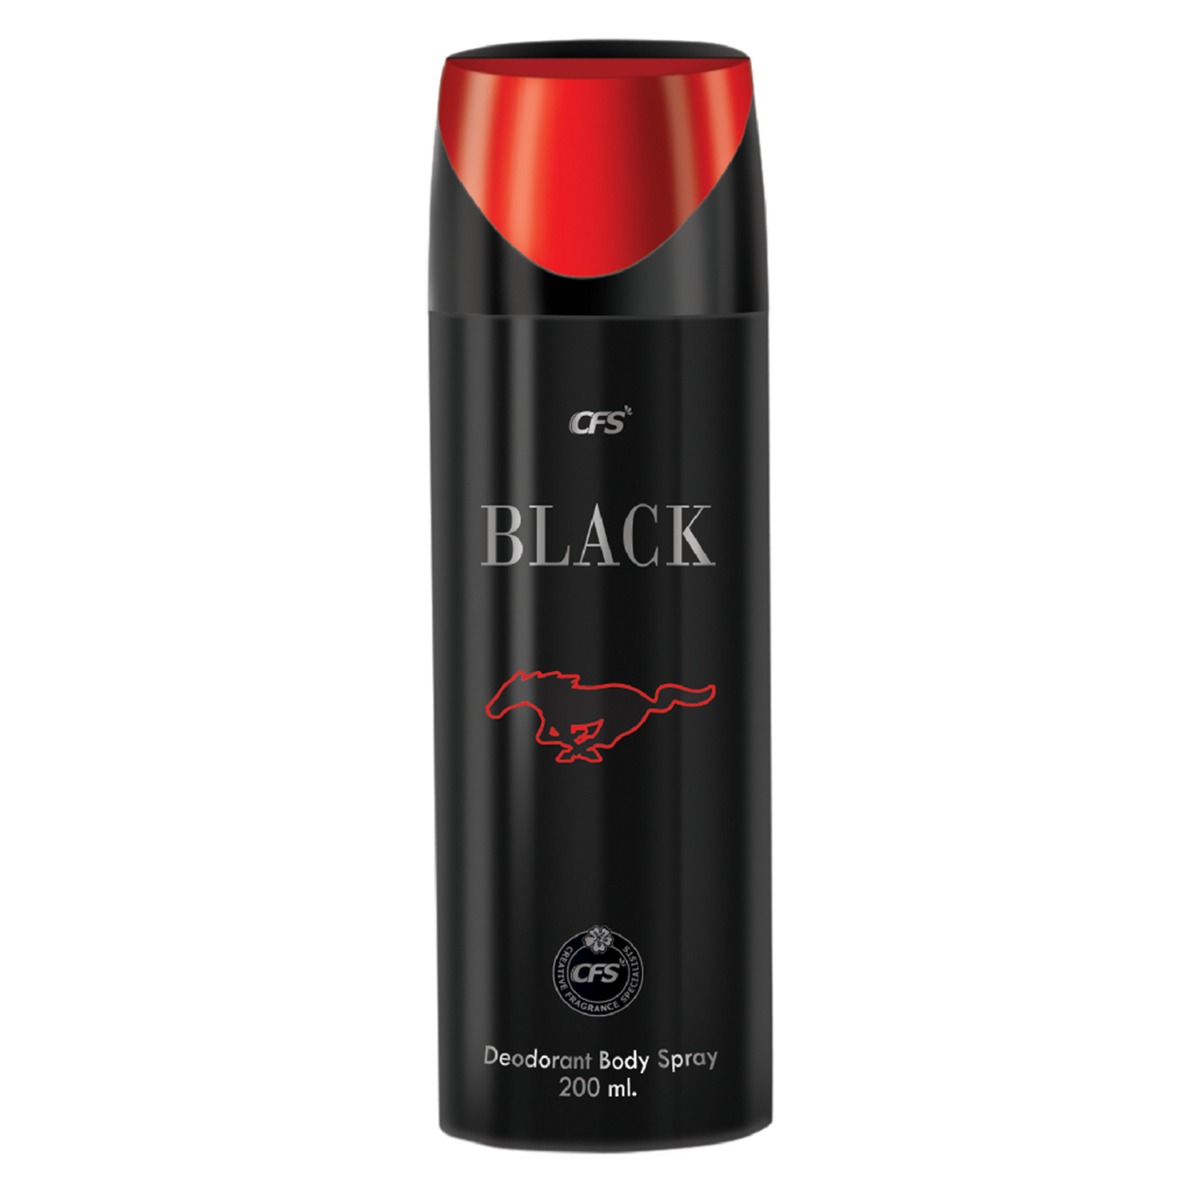 CFS Black Long Lasting Best Deodorant Body Spray, 200ml